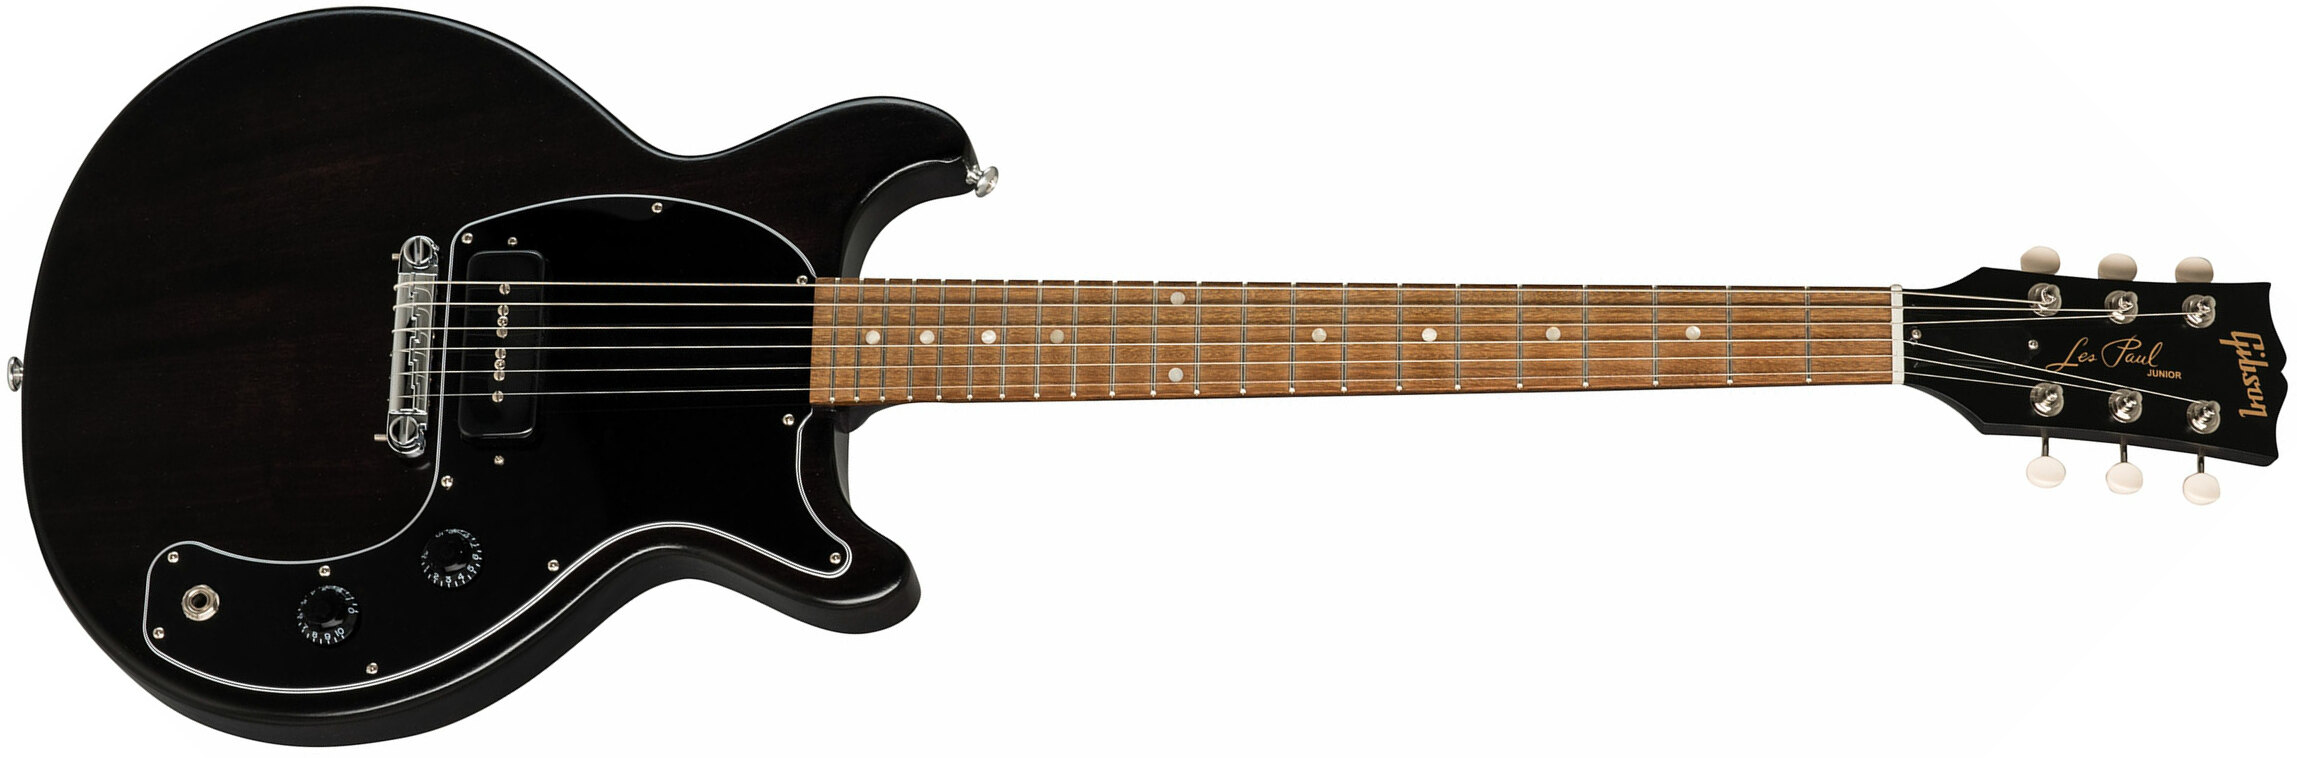 Gibson Les Paul Junior Dc Tribute 2019 P90 Ht Rw - Worn Ebony - Single cut electric guitar - Main picture